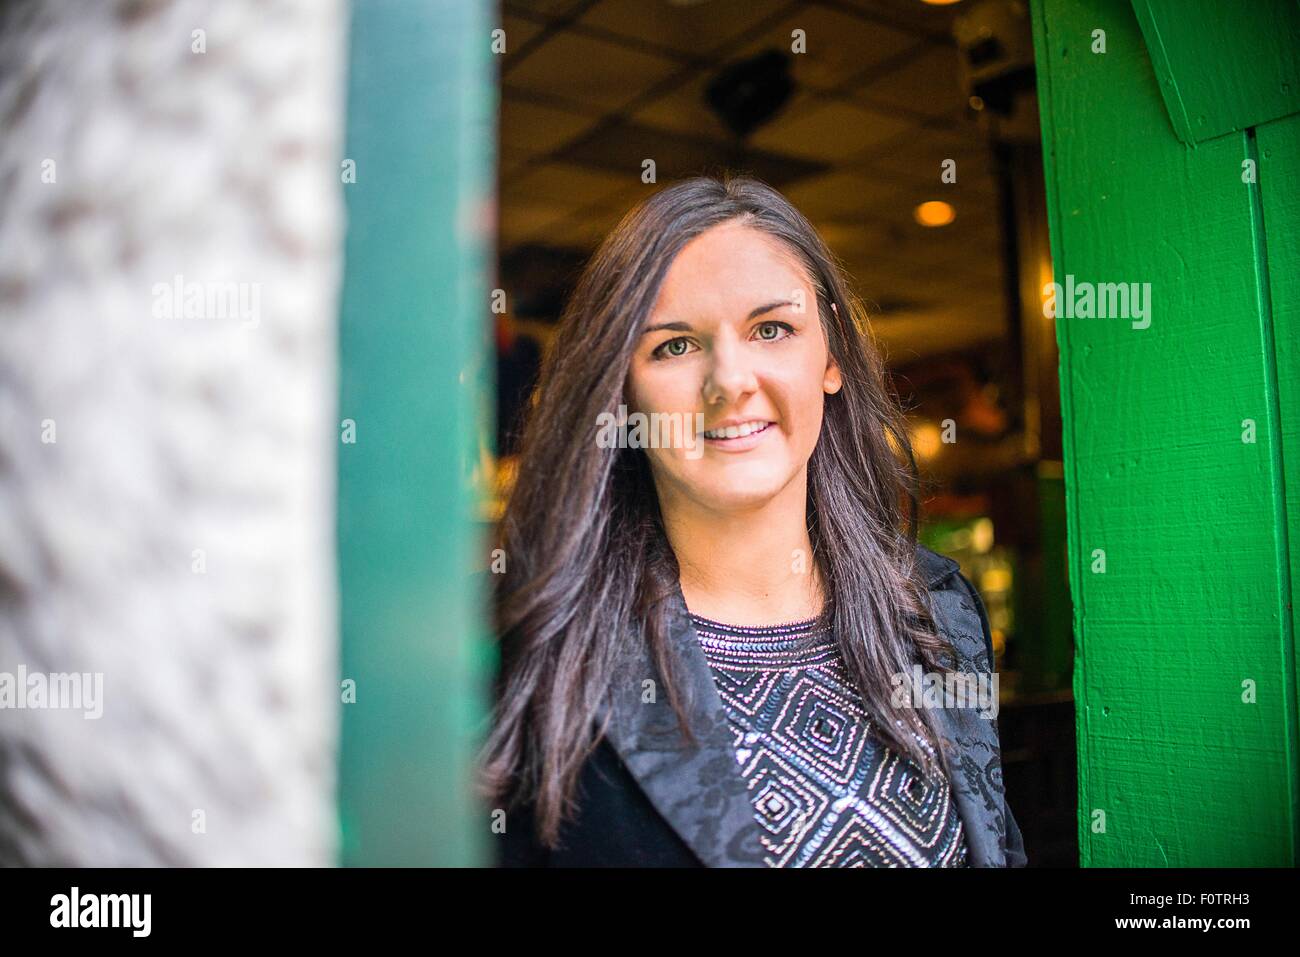 Portrait of young woman in green doorway Stock Photo